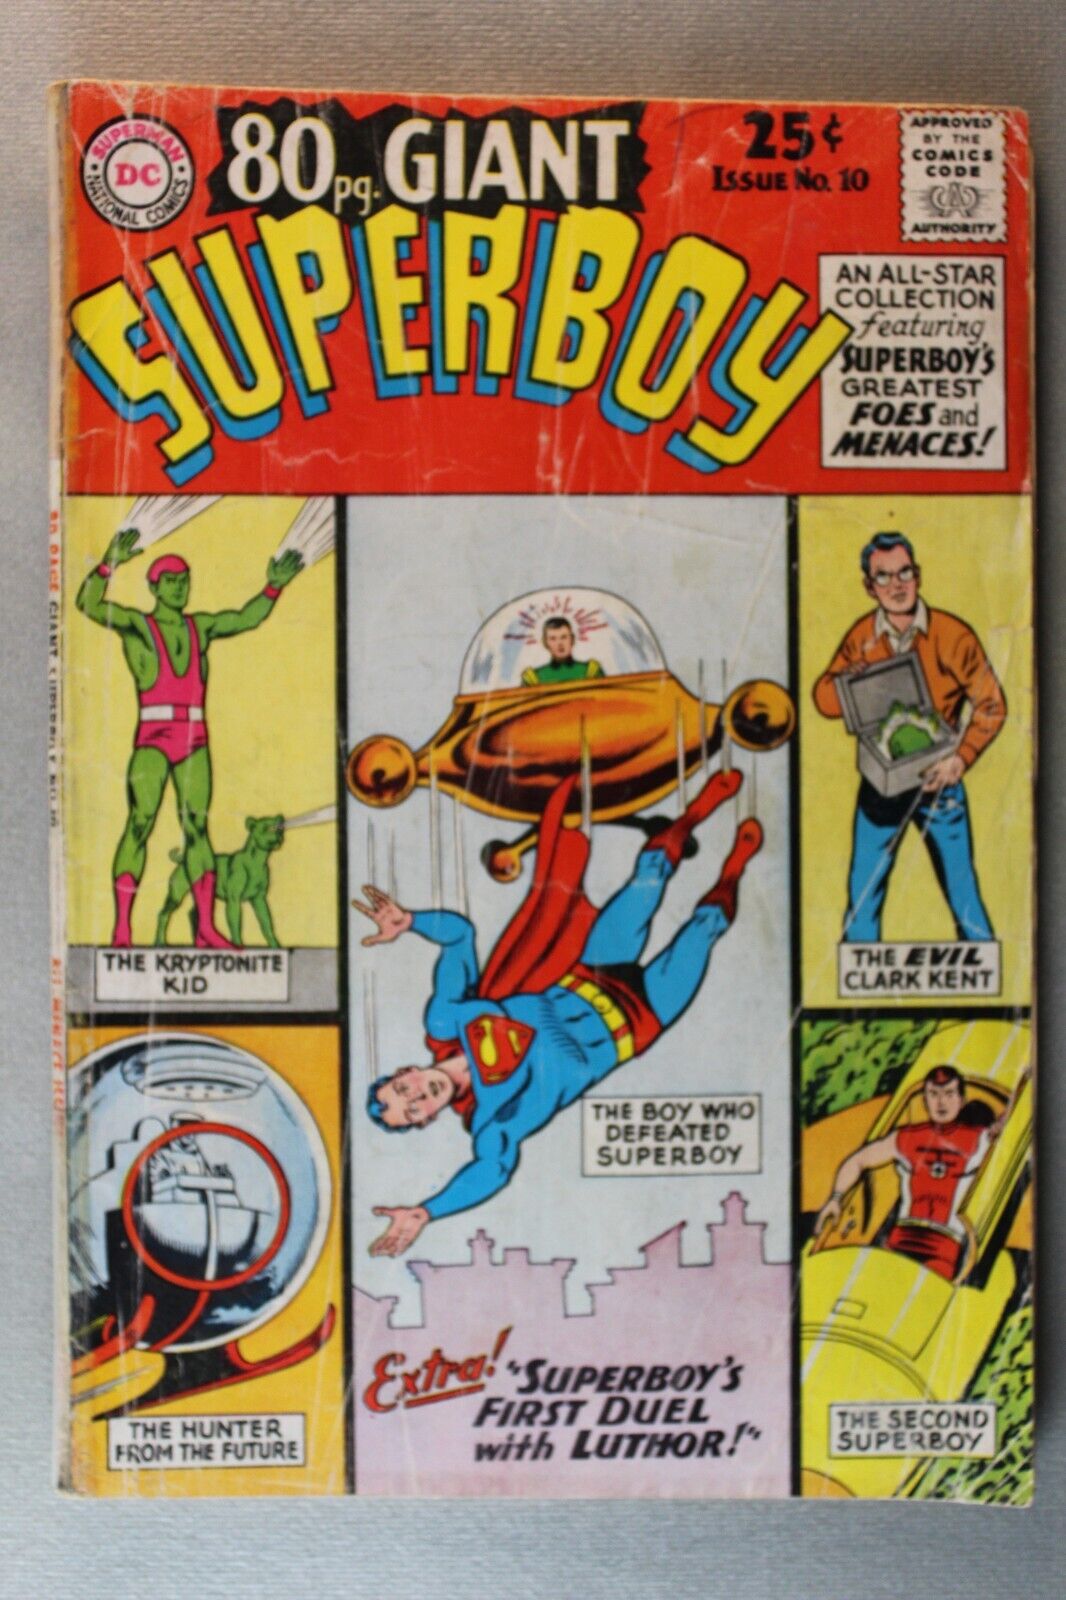 SUPERBOY 80 pg. GIANT #10 *1965* Lower Grade, creases, wear, tape on spine...